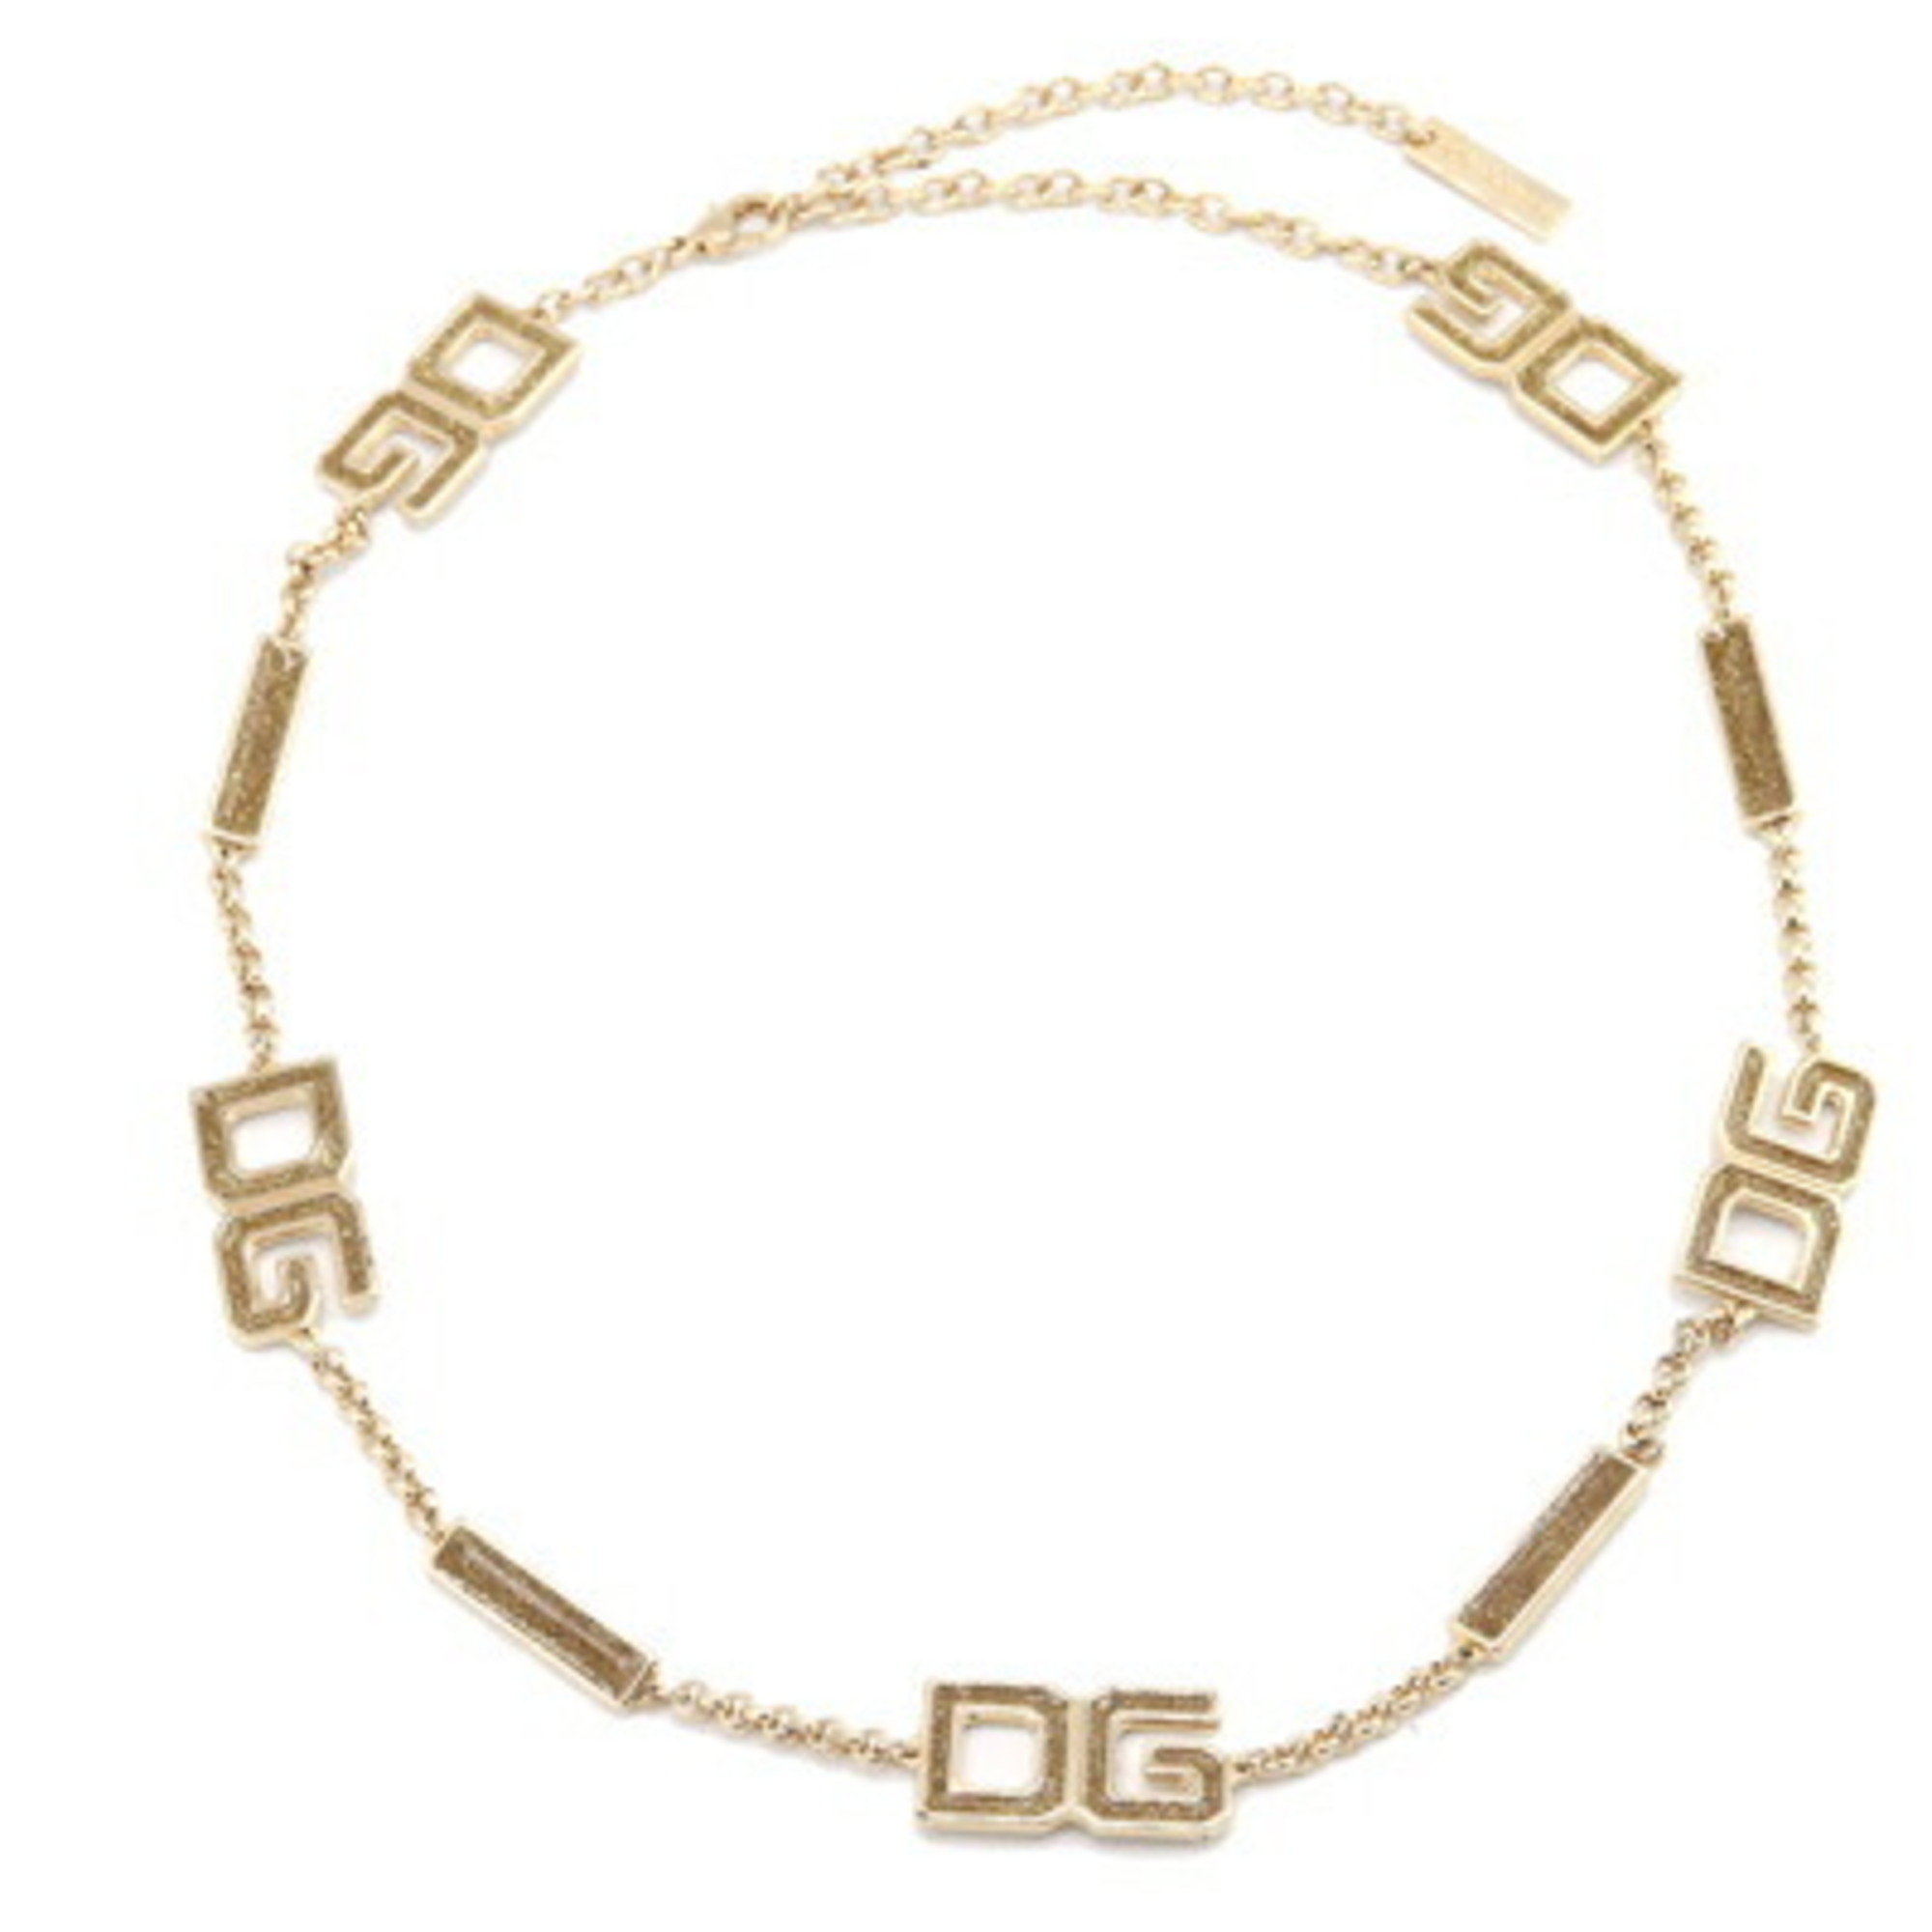 Dolce & Gabbana Necklace Gold Metal Lame Choker Pendant Chain Women's DOLCE GABBANA